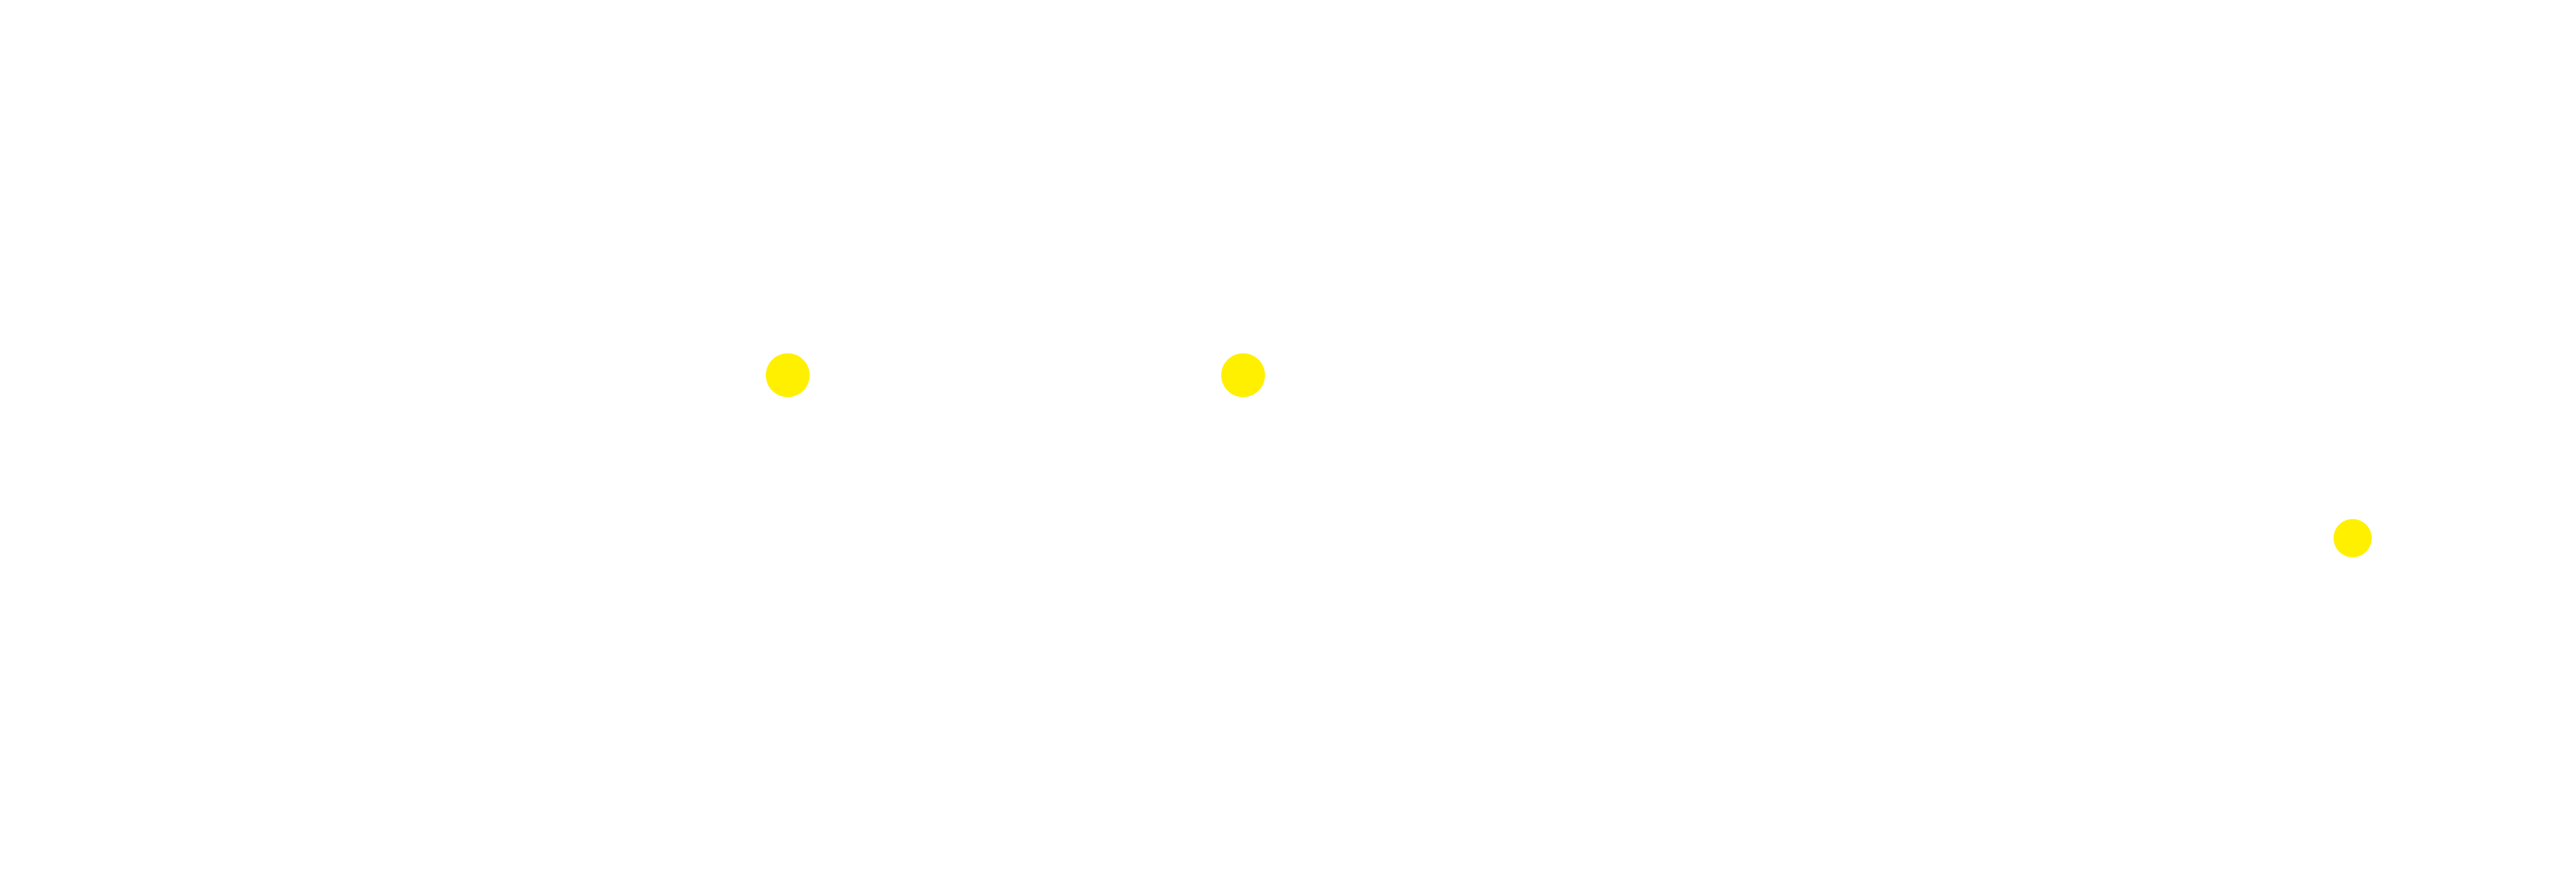 G.M.S Creativity